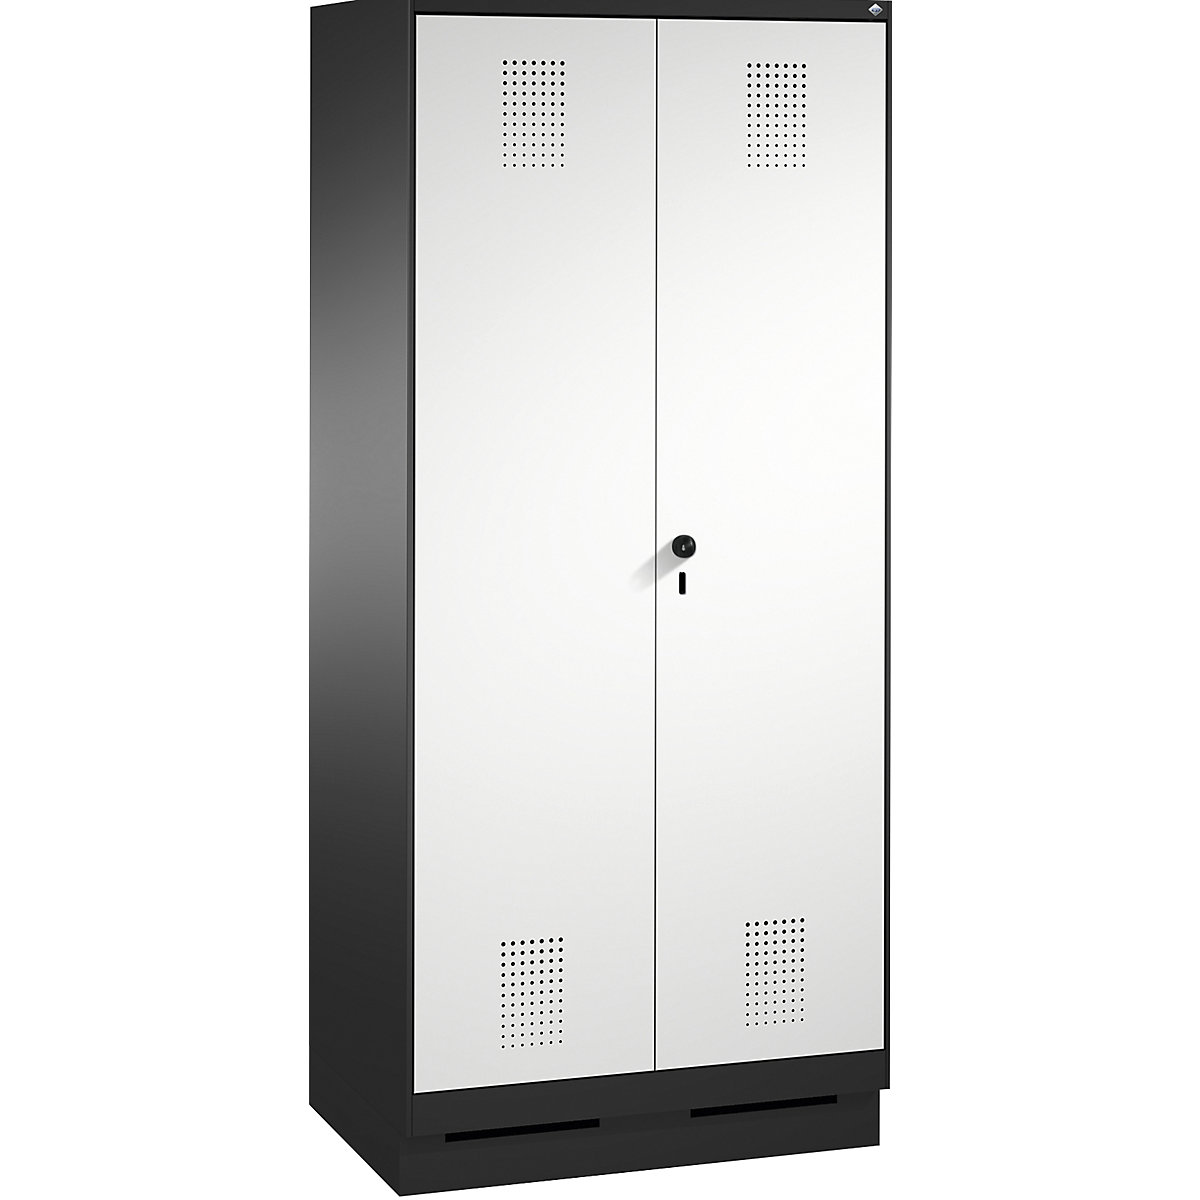 Garderobna omara EVOLO, dvokrilna vrata – C+P, 2 razdelka, širina razdelka 400 mm, s podnožjem, črno siva / svetlo siva-10